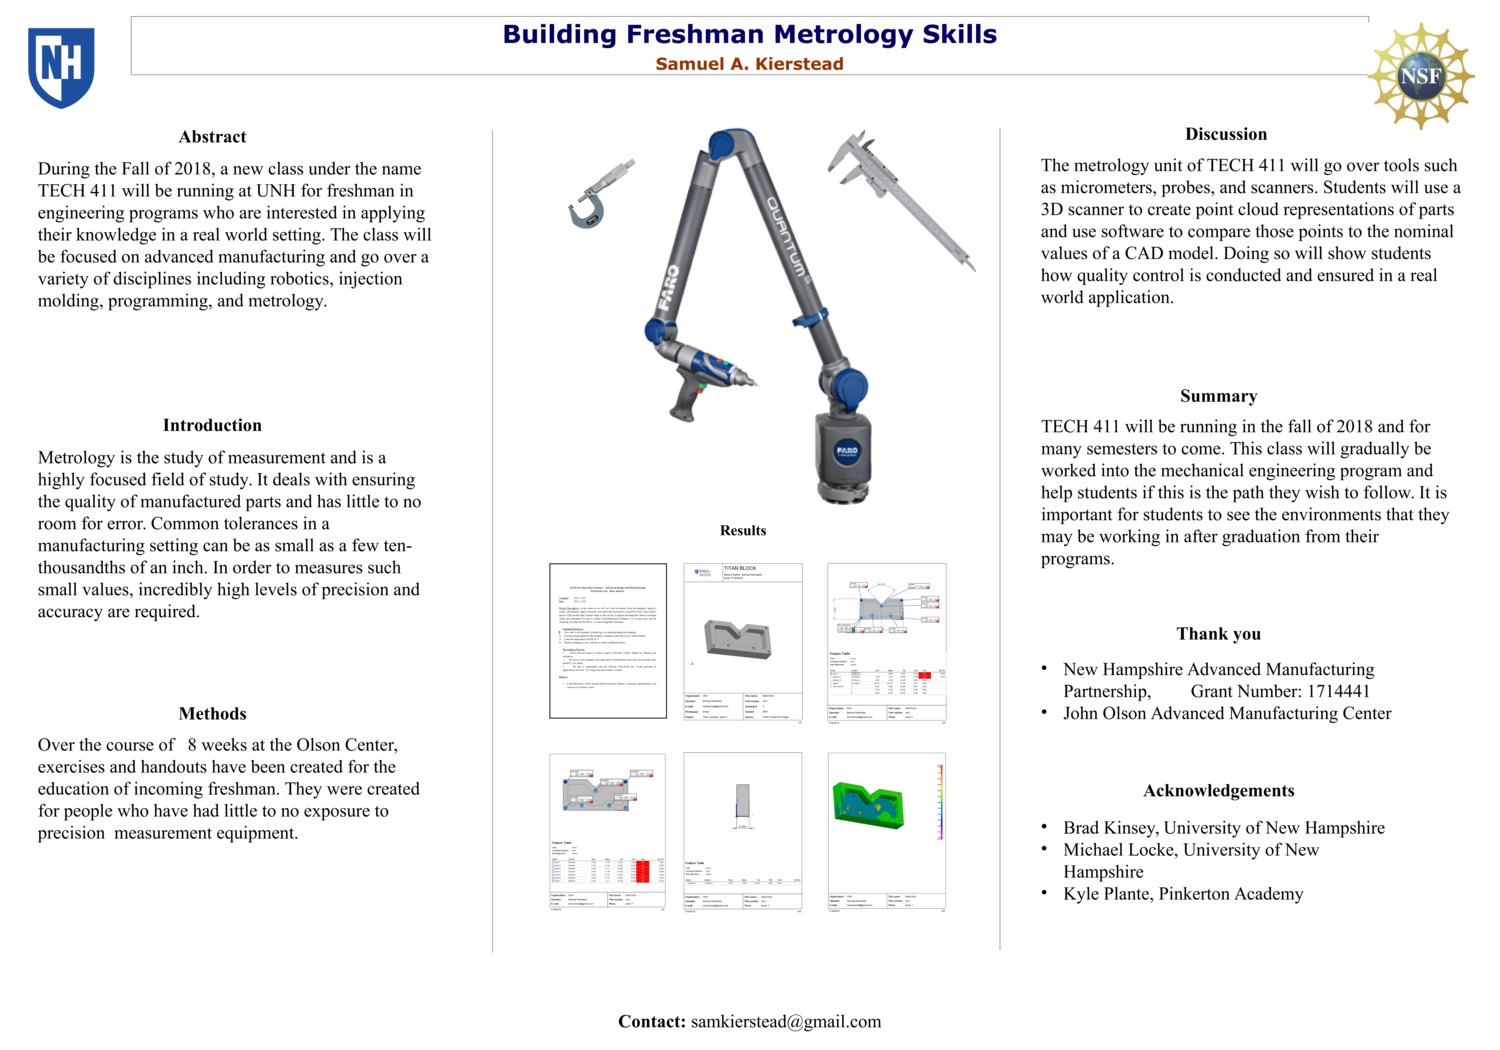 Building Freshman Metrology Skills by samkposters